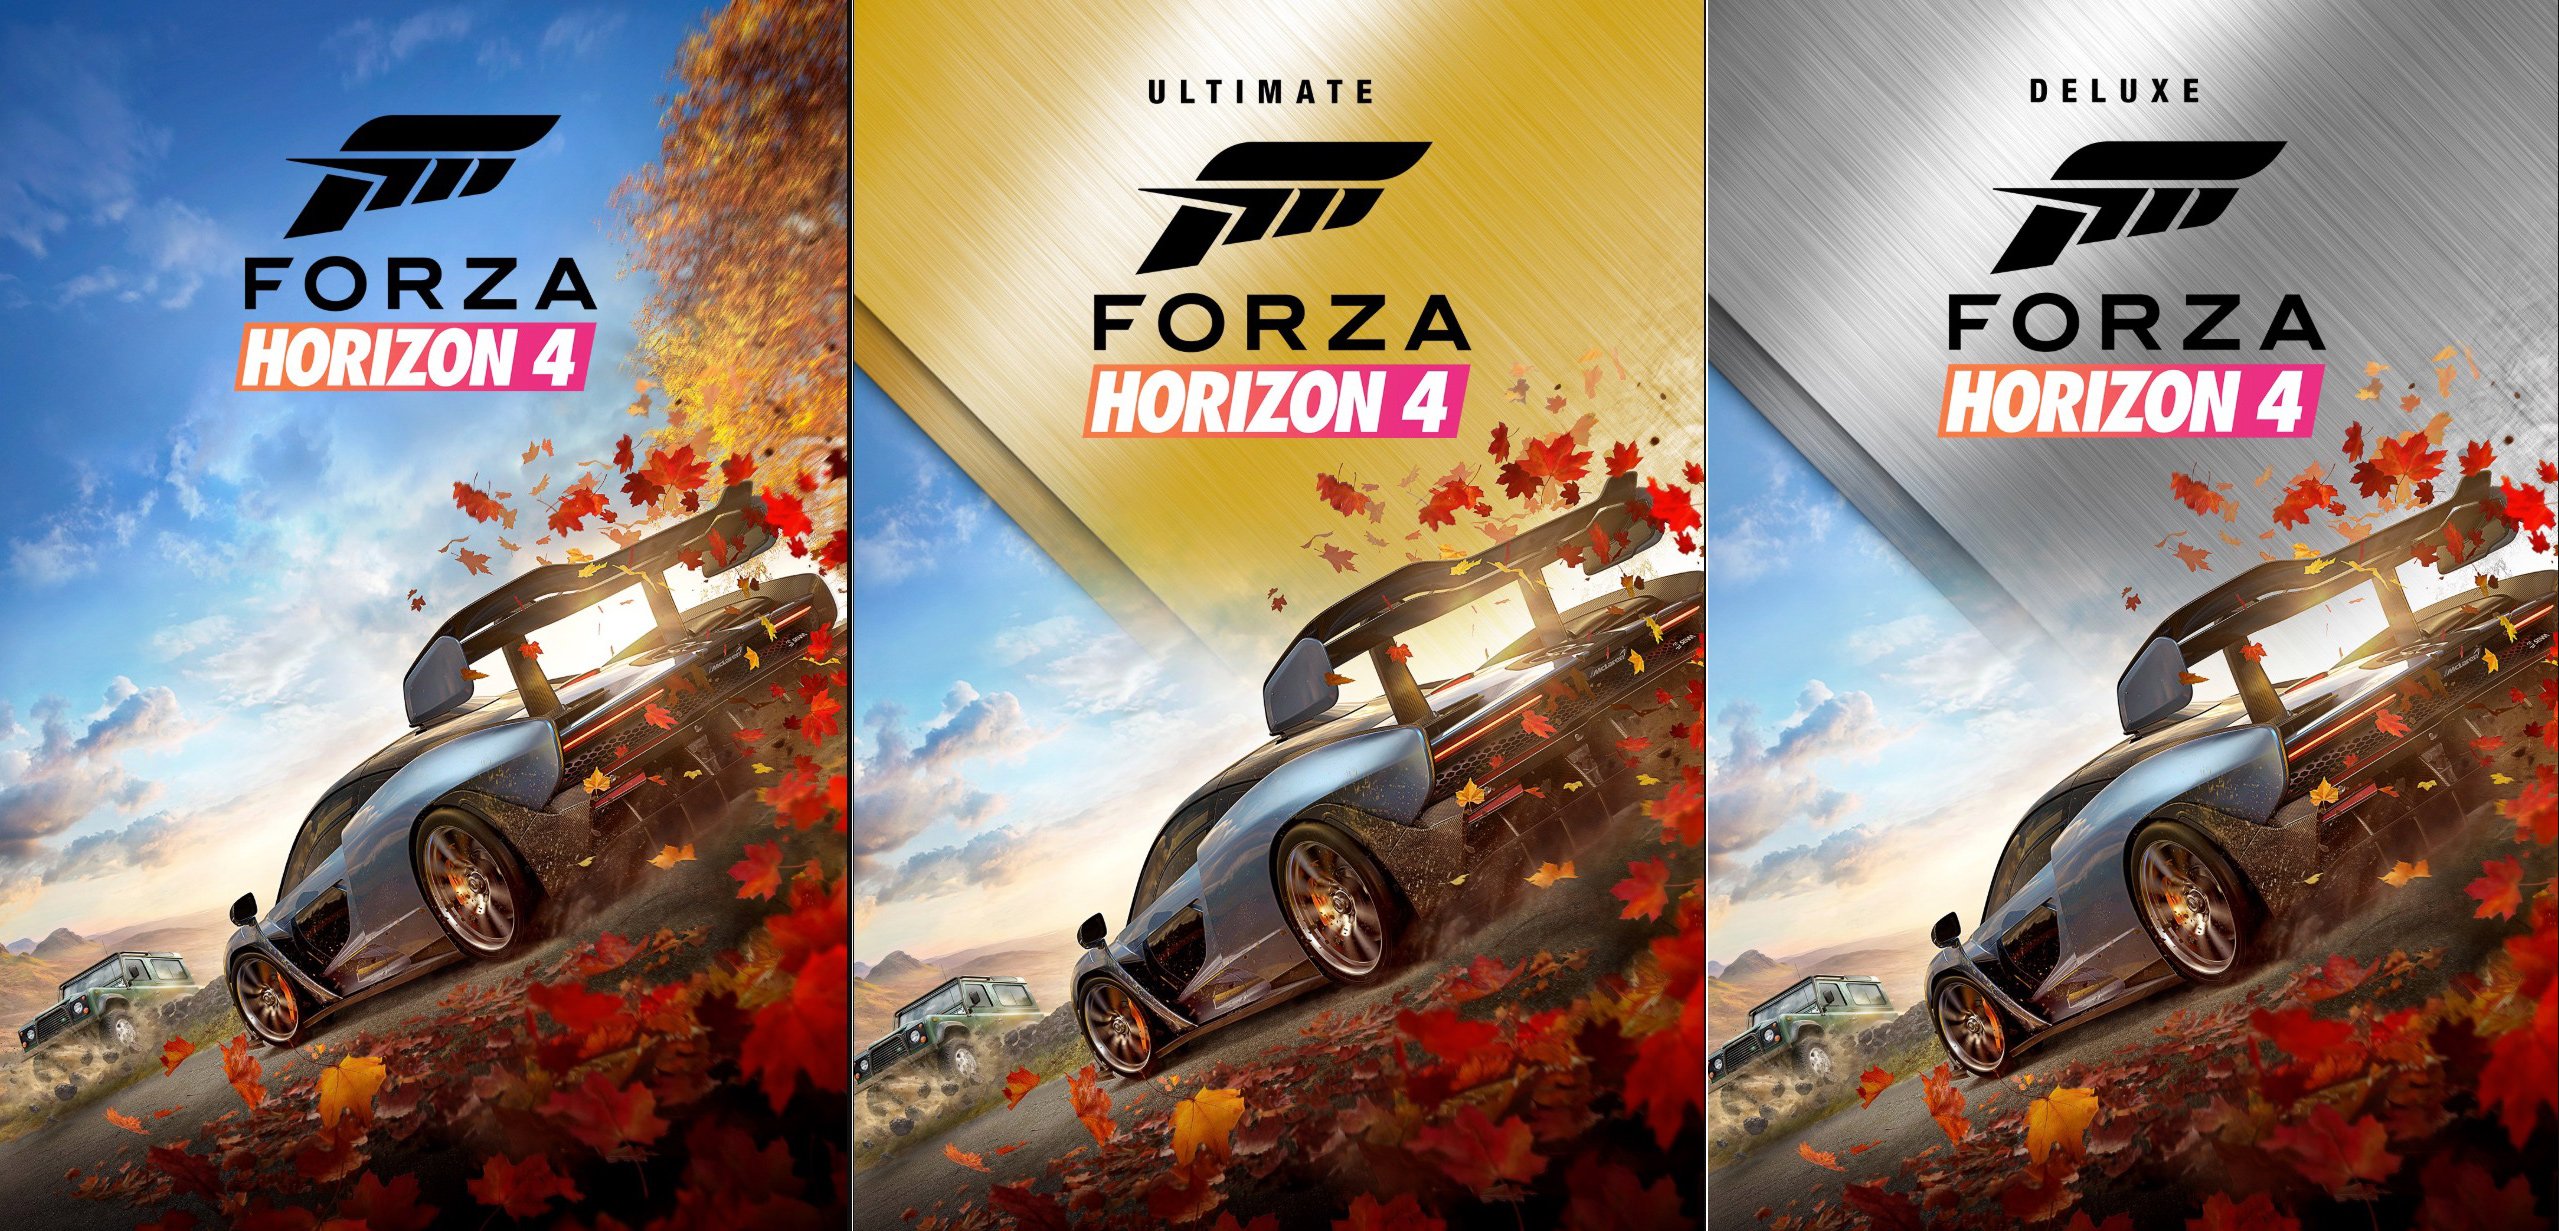 Forza horizon 4 standard edition vs ultimate nobsound ns 15g pro